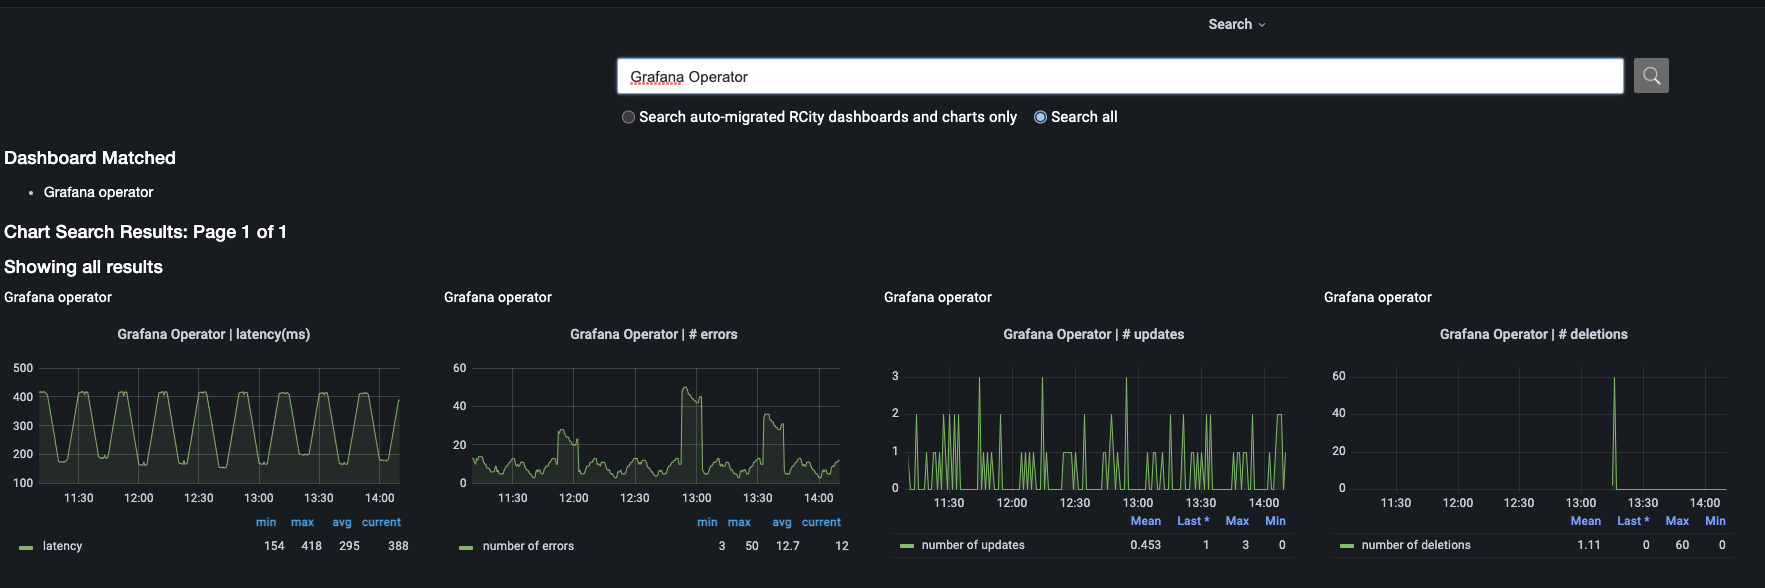 Analytics Dashboard  Documentation - Roblox Creator Hub